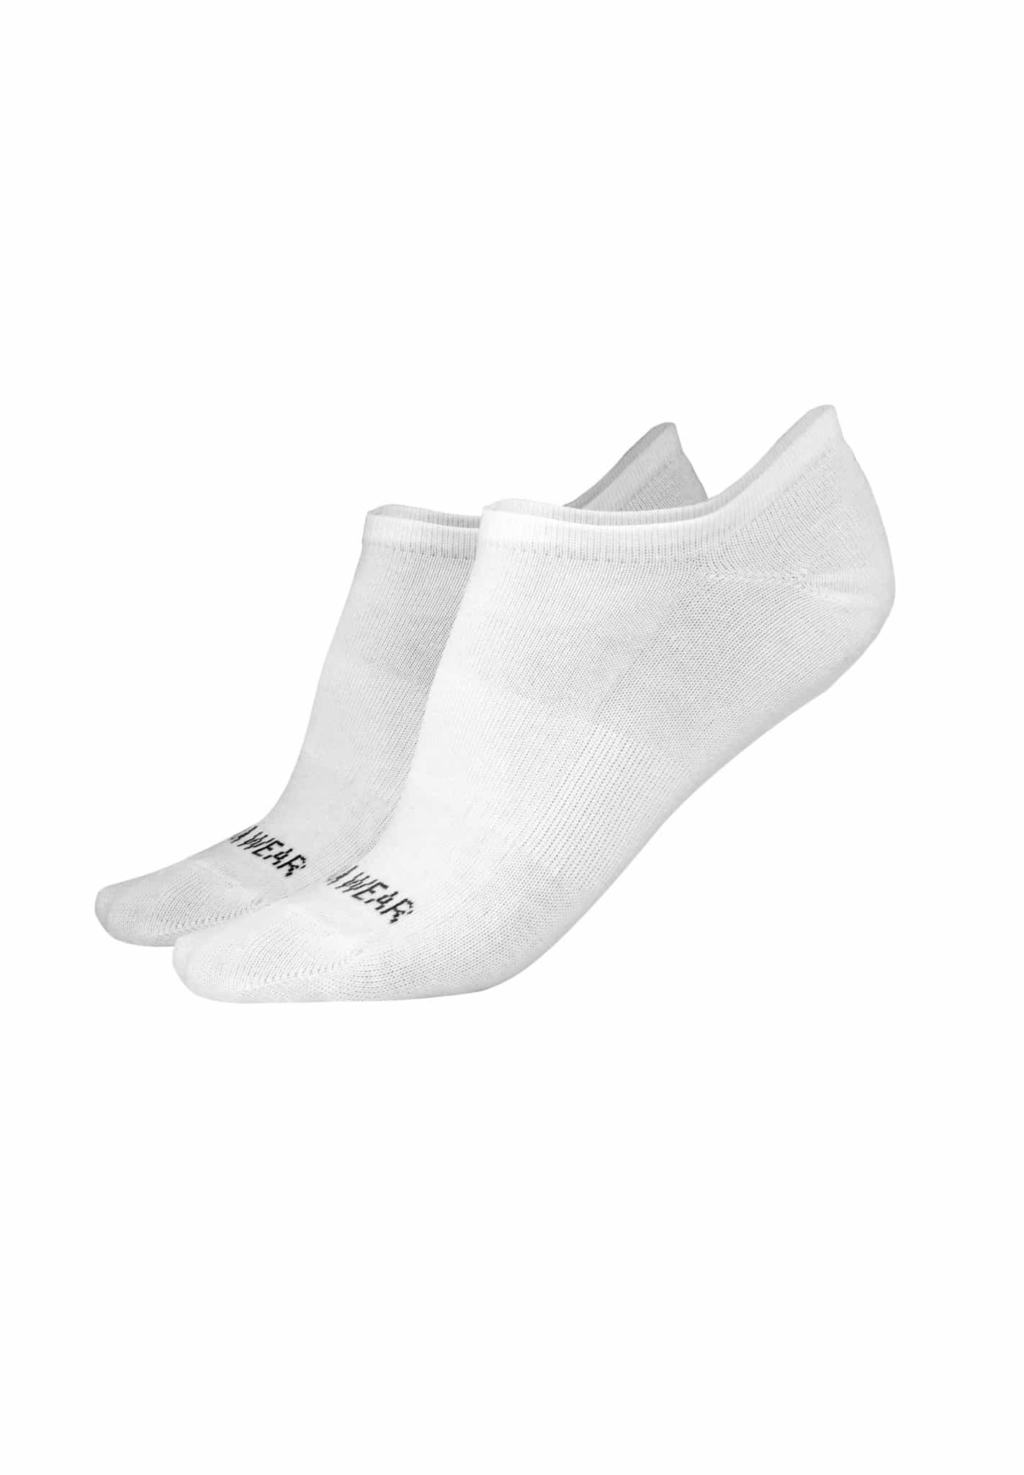 99205100 ankle socks 2 pack white scaled